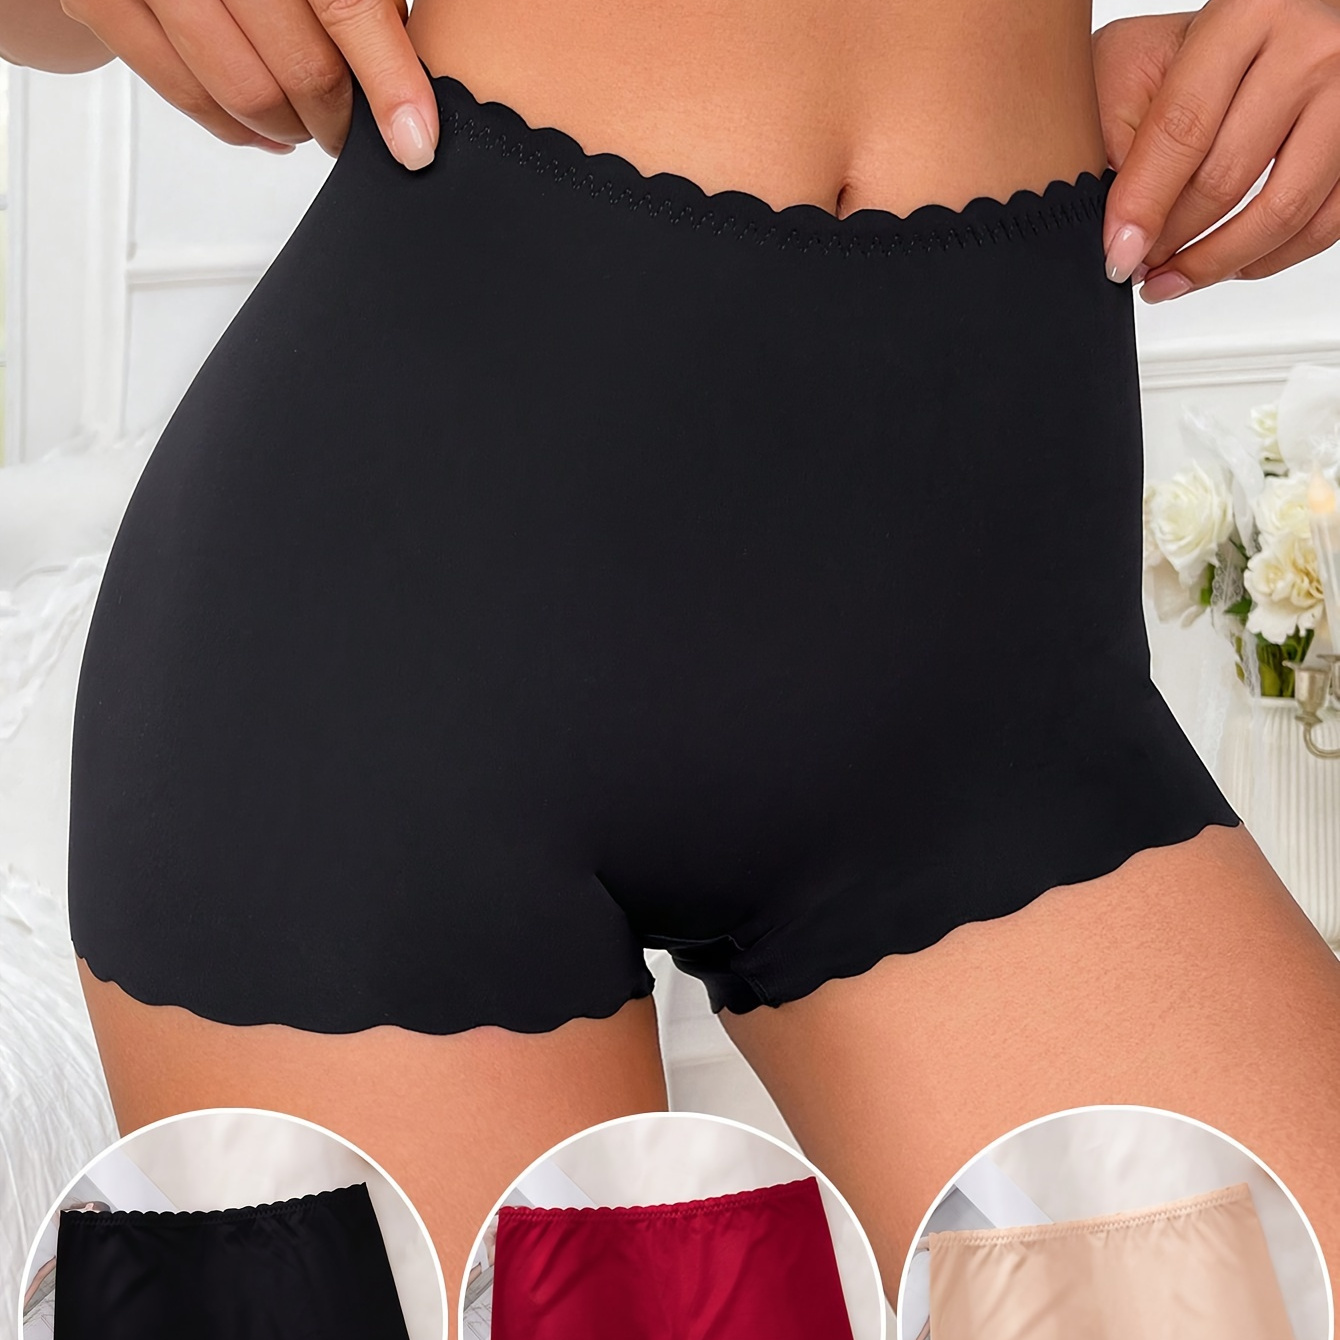 

3 Pcs Simple Boyshort Panty, Plain Scallop Trim High Waisted Tummy Control Intimates Boxer Shorts, Women's Lingerie & Underwear